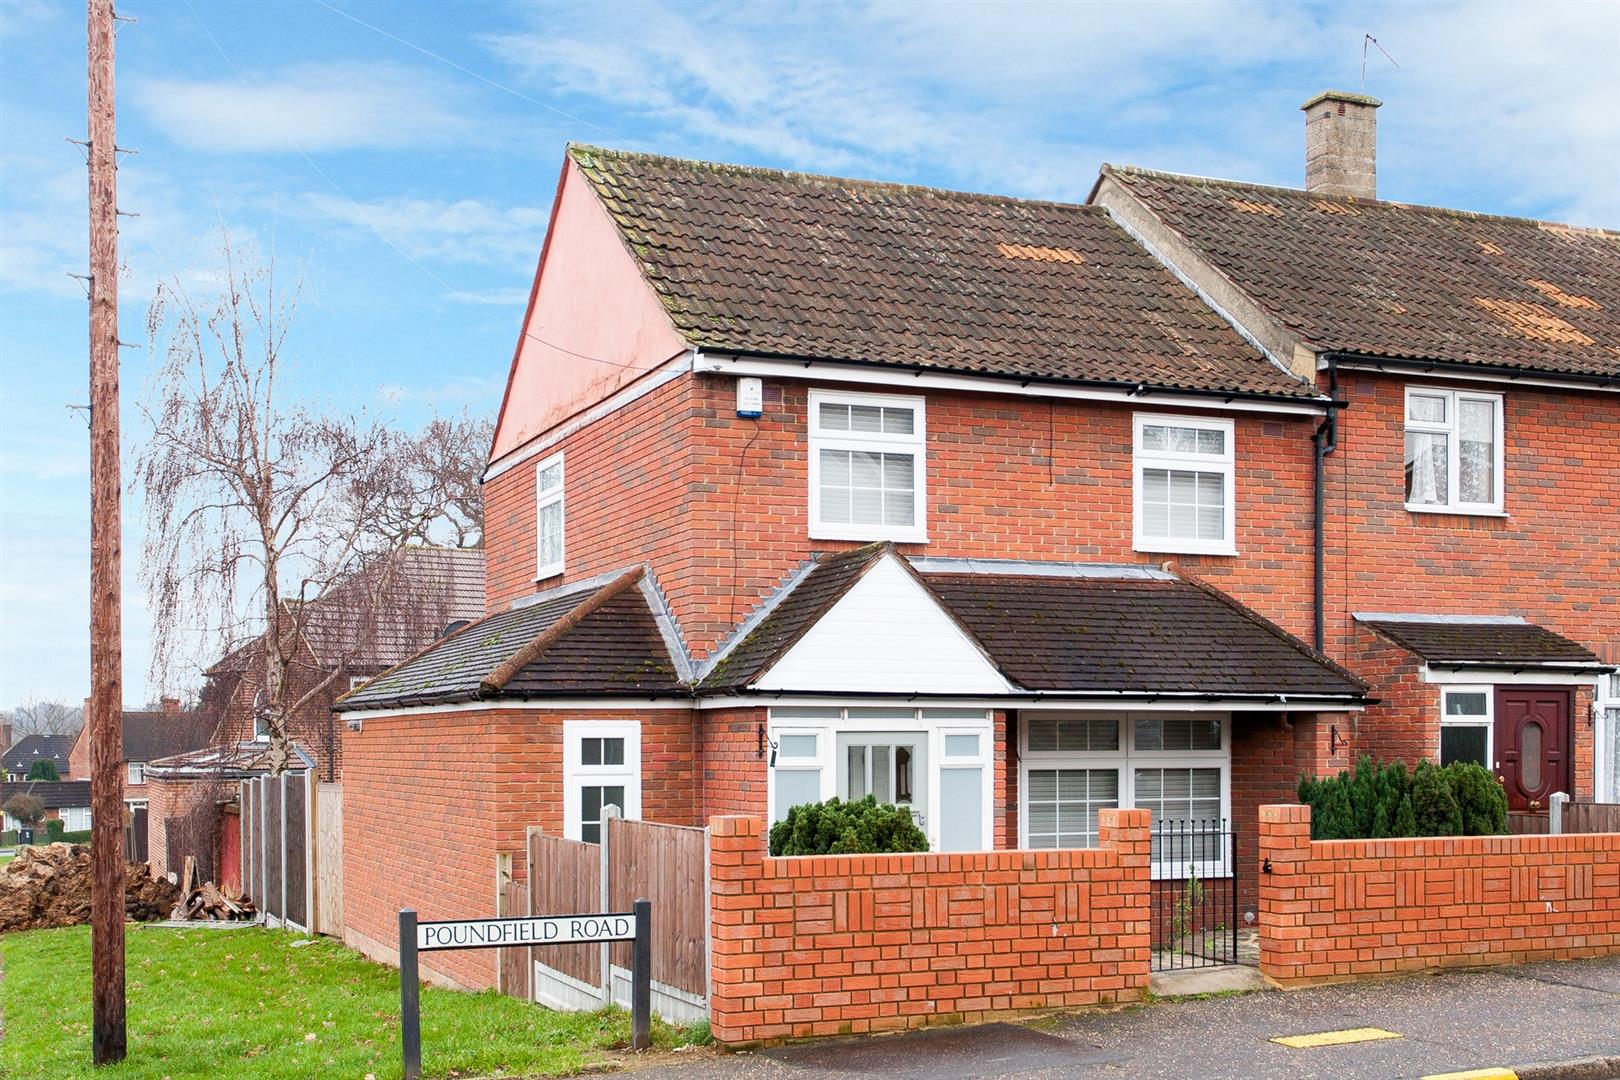 Similar Property: House in Loughton